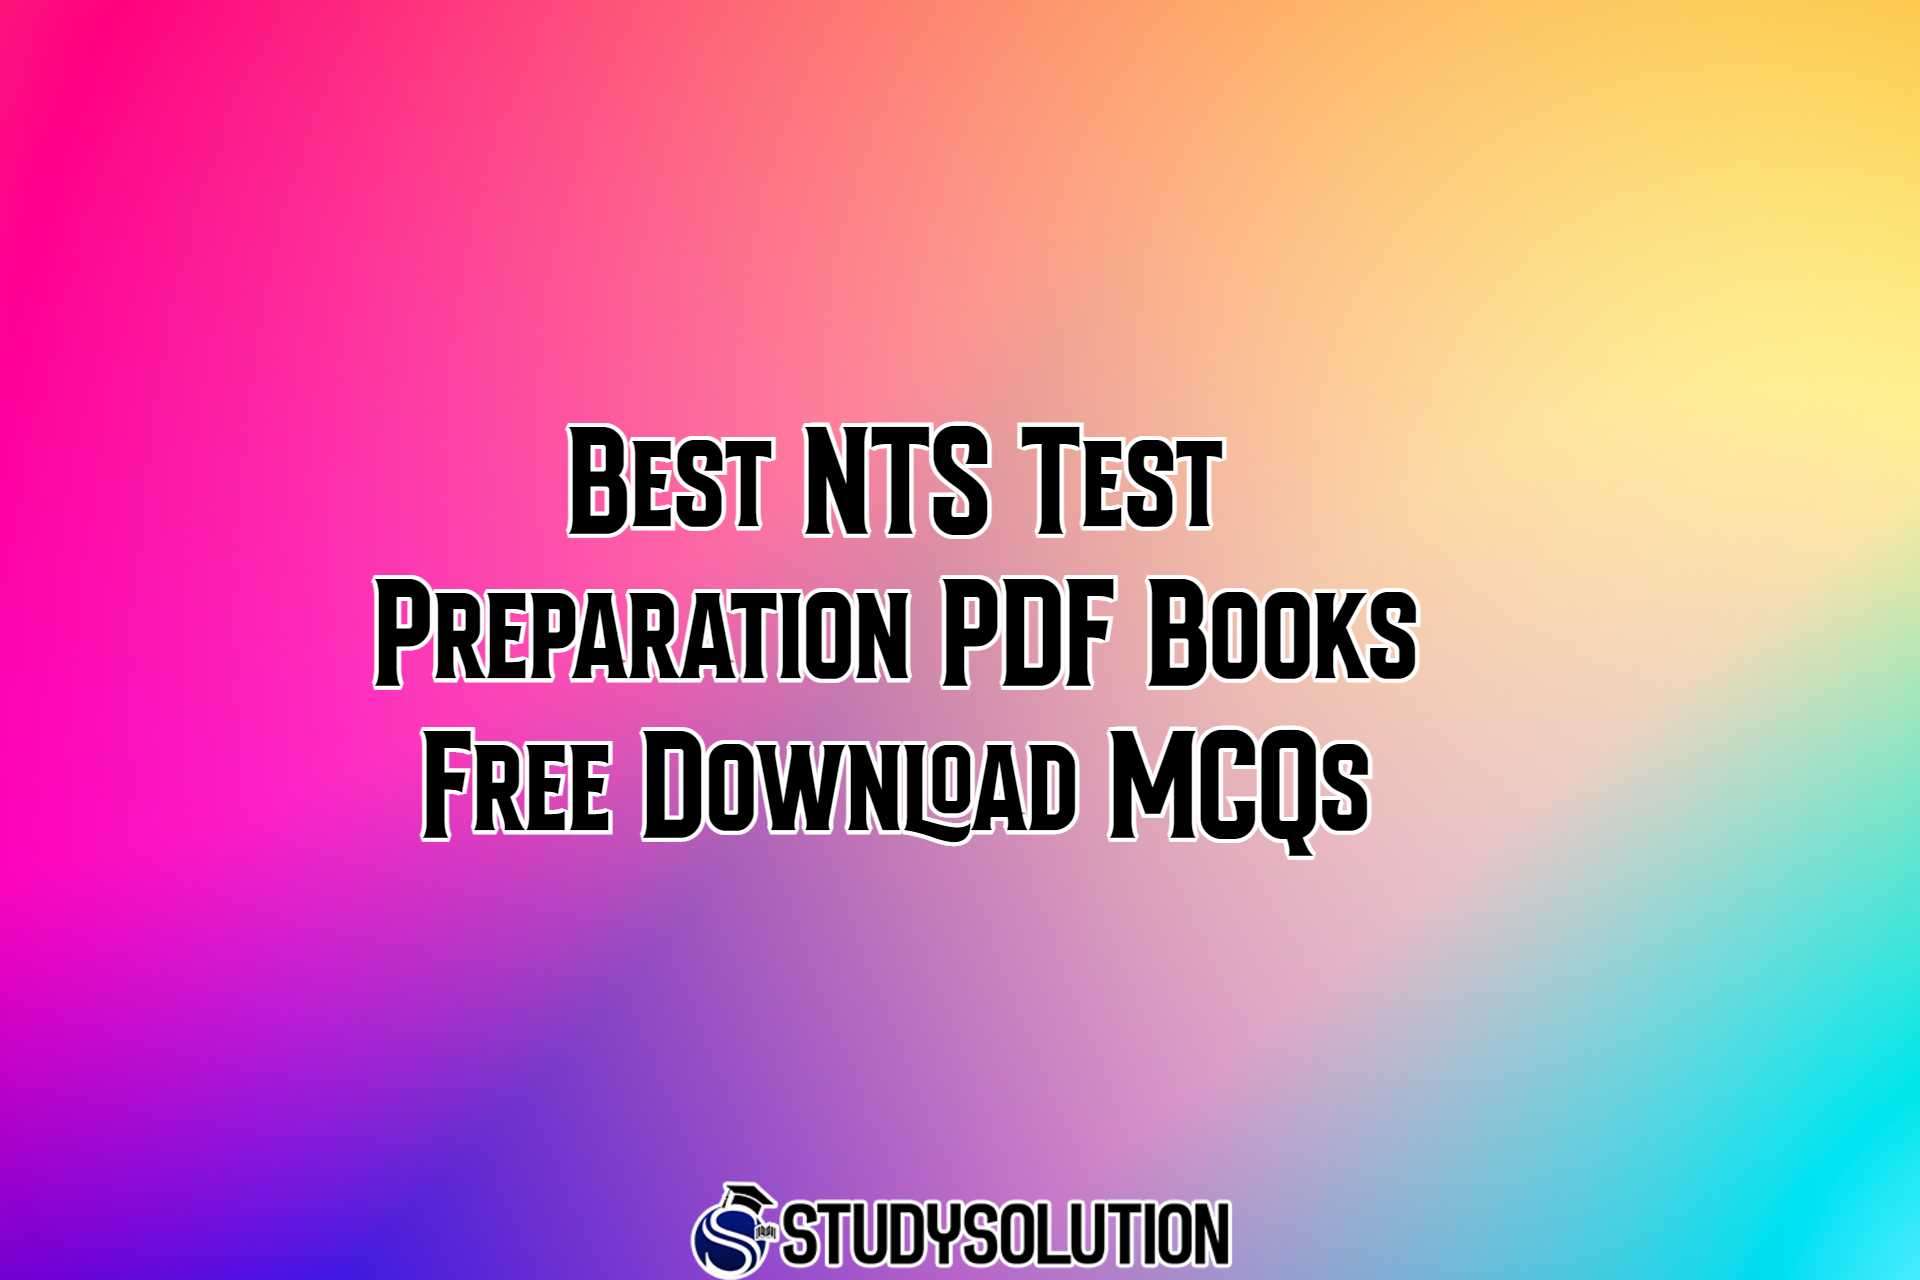 Best NTS Test Preparation PDF Books Free Download MCQs